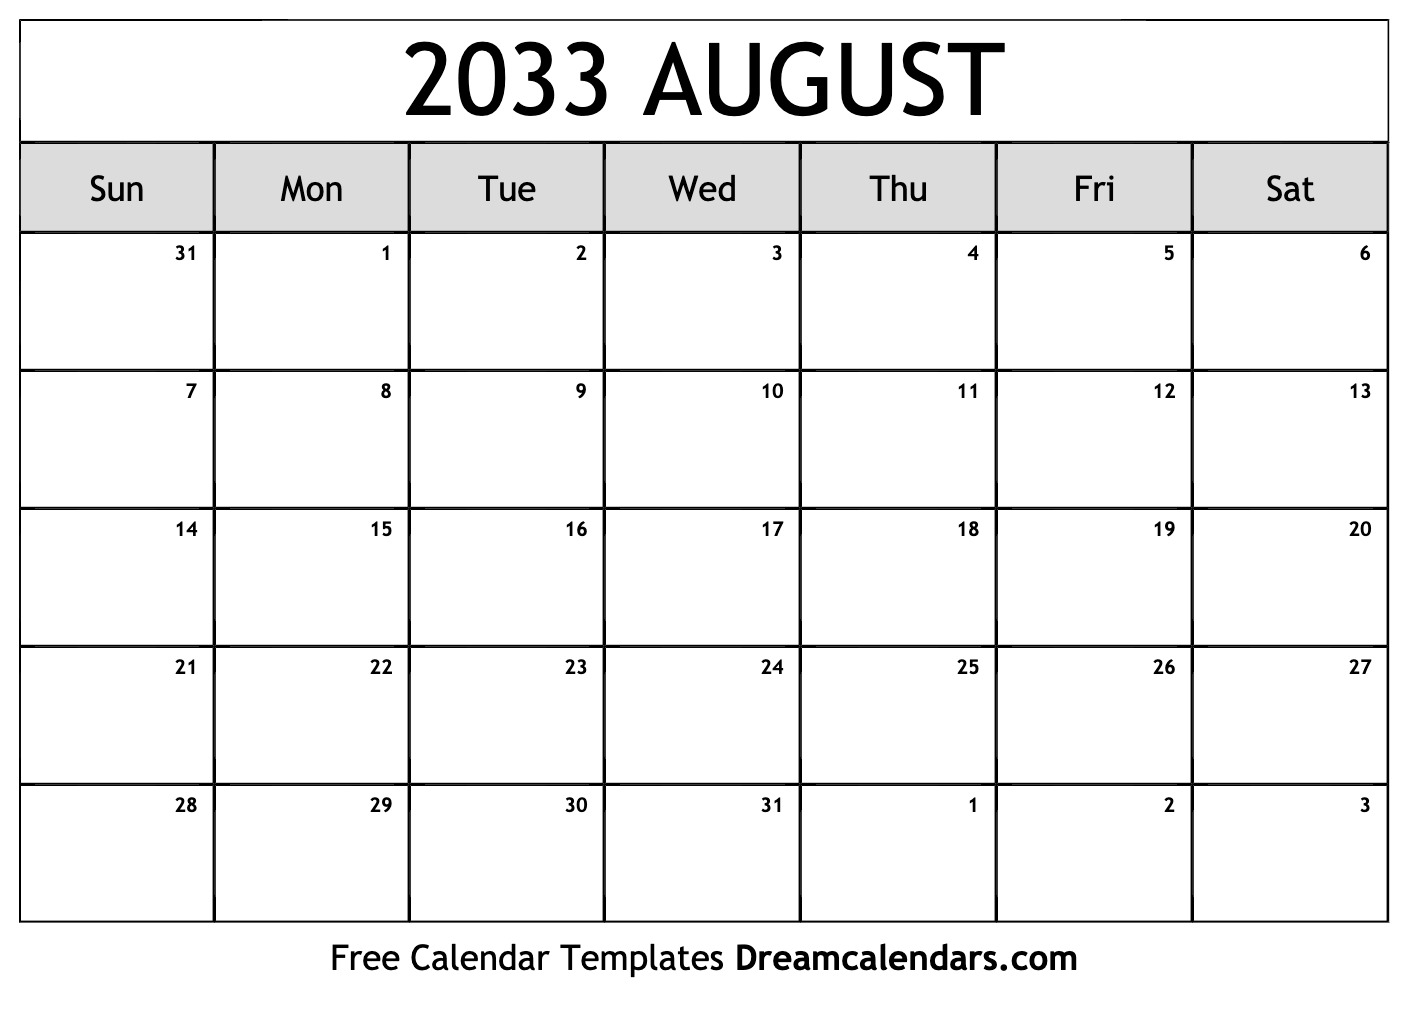 August 2033 calendar free blank printable templates